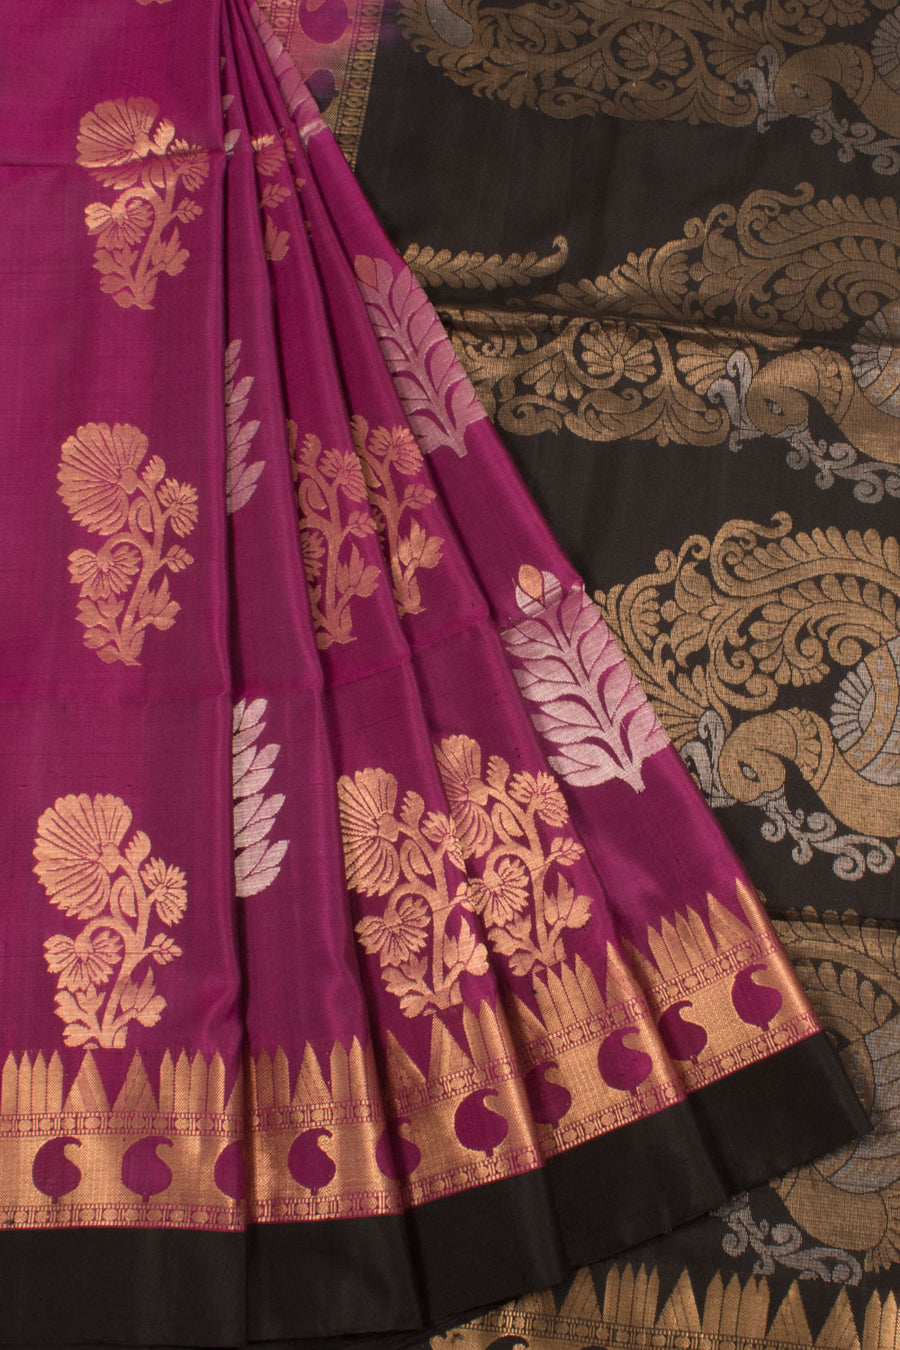 Handloom Kanjivaram Soft Silk Saree with Floral Motifs, Paisley Border and Peacock Pallu